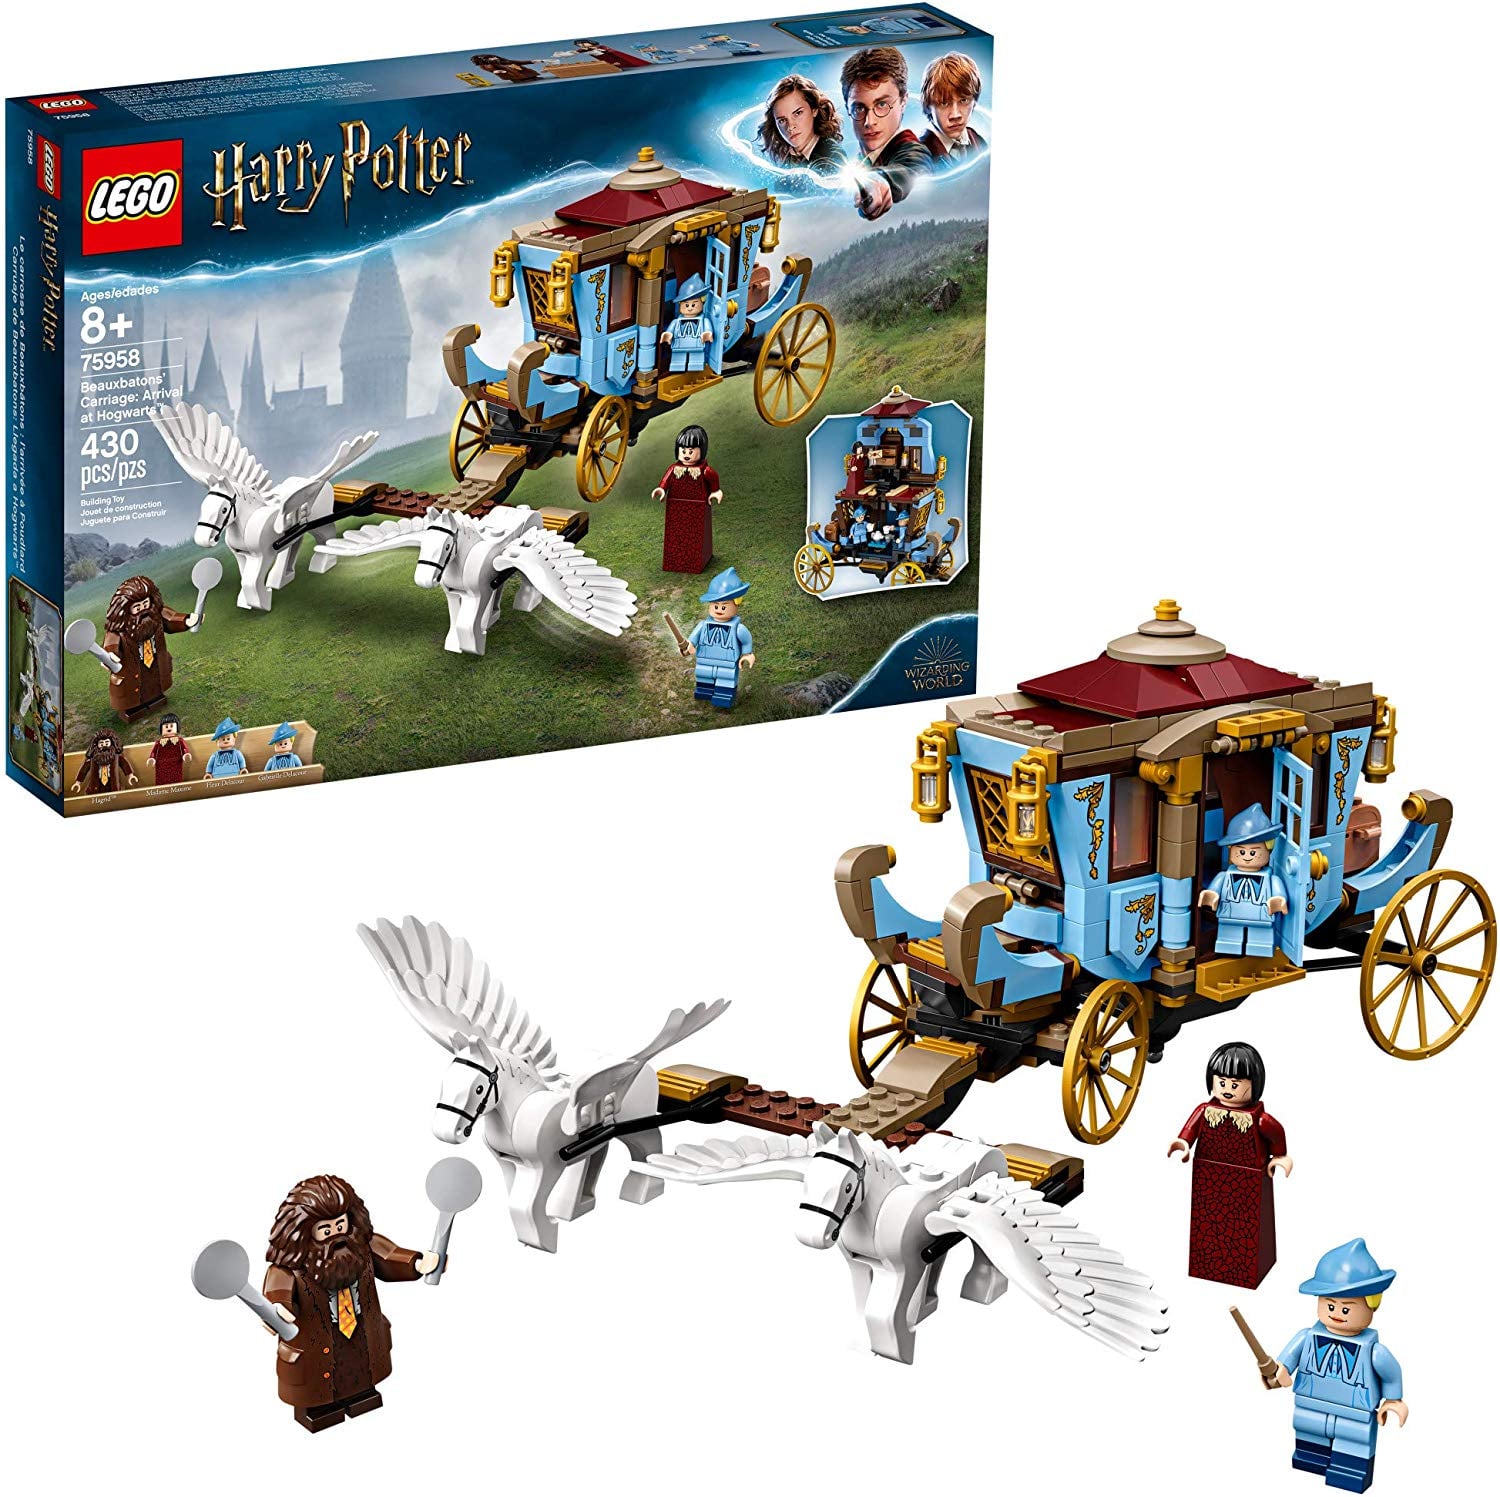 New Harry Potter Lego Sets 2019